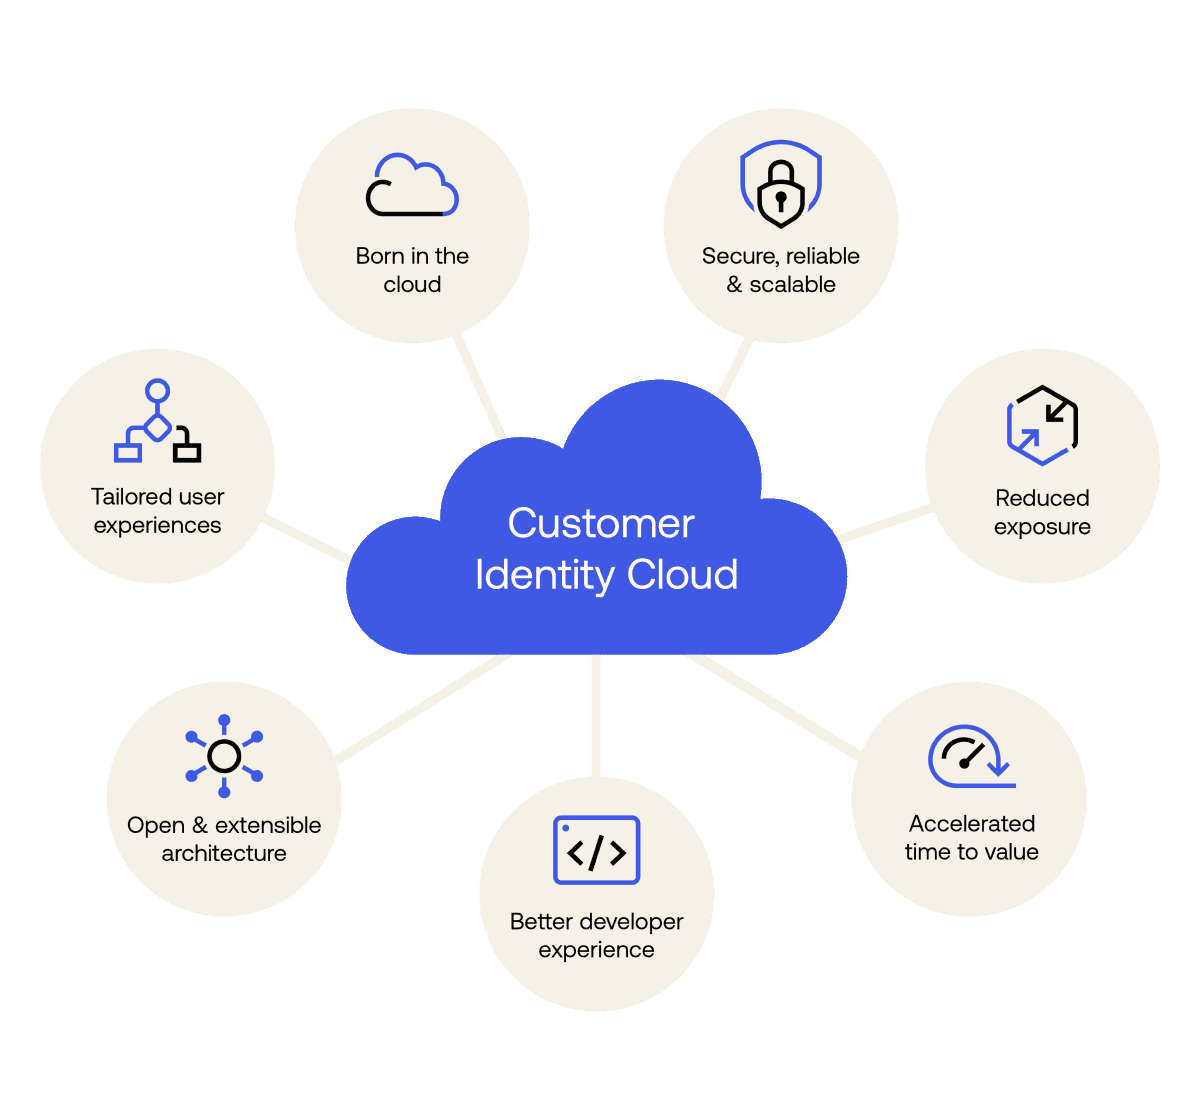 Okta's solution for Customer Identity